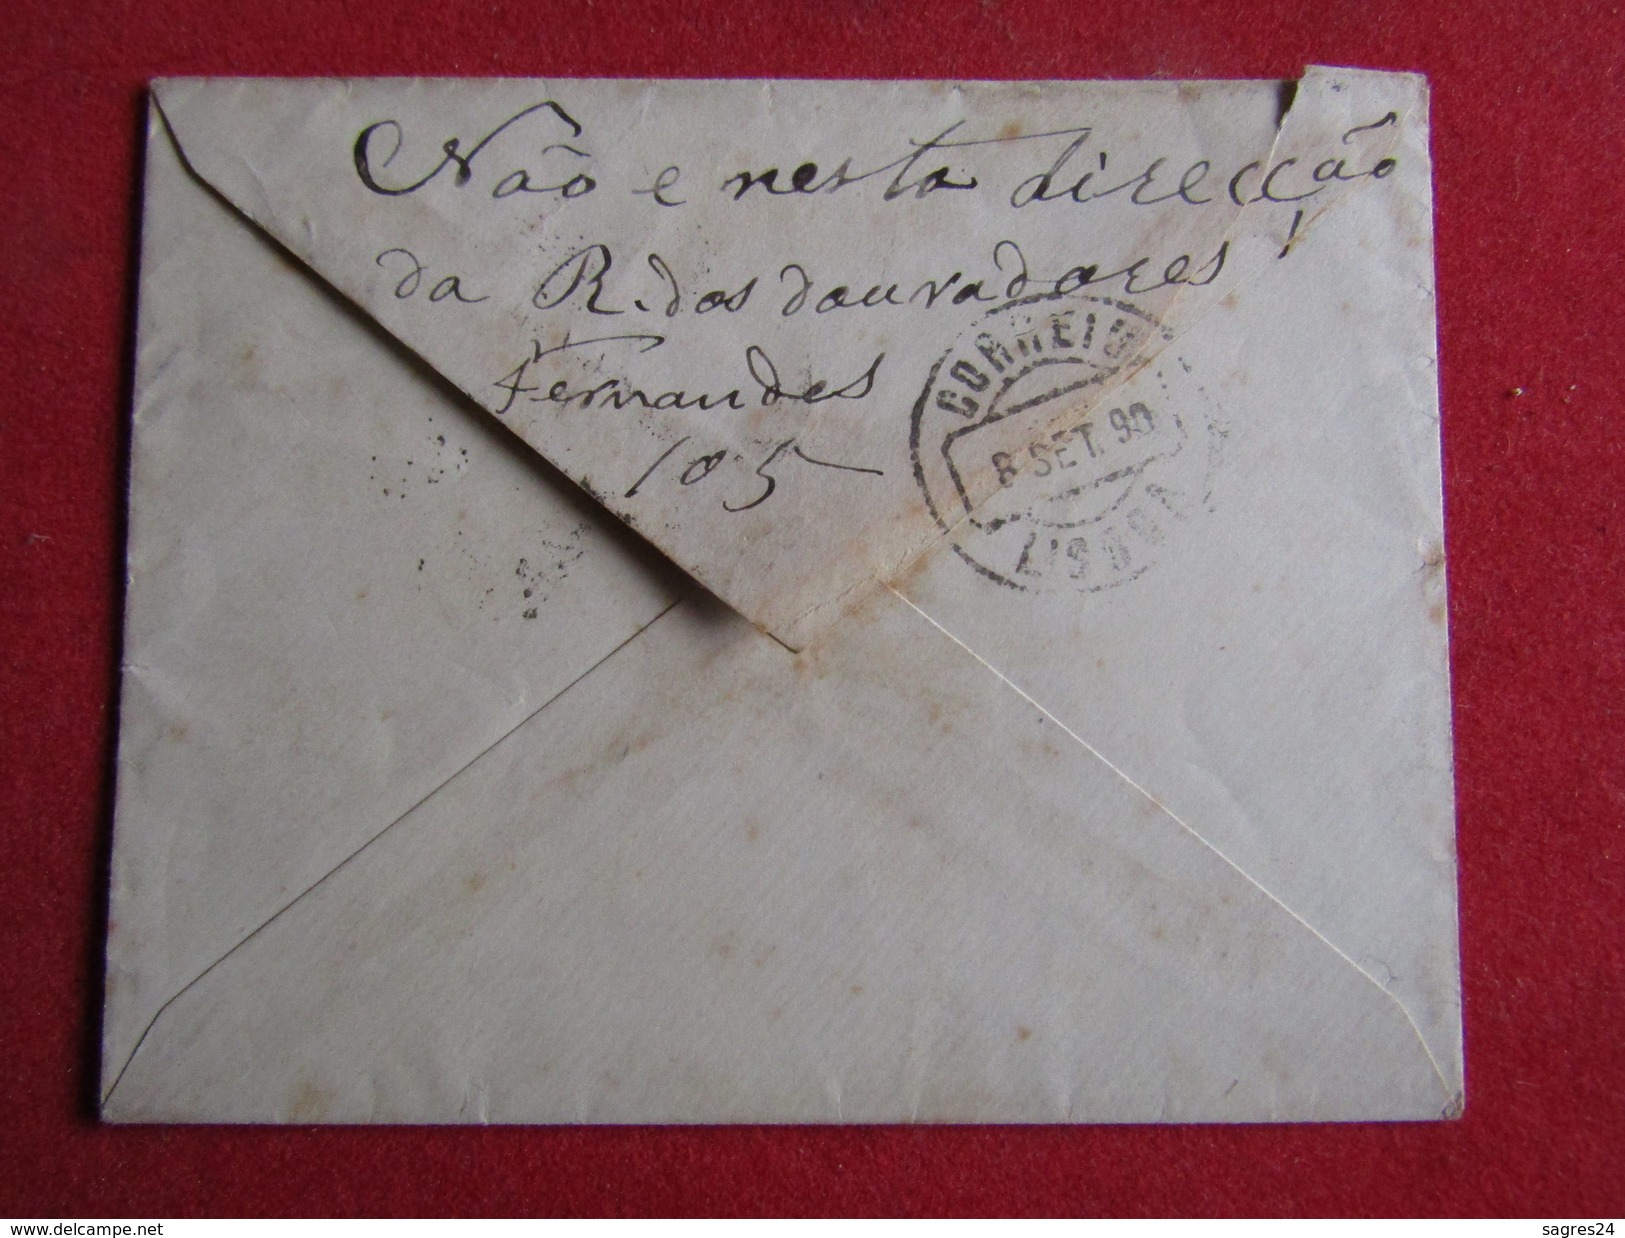 Portugal - D.Luiz I - 25 Reis Sobre Carta Carimbo De Borba 1890 - Sur Lettre - Afinsa 63 - Covers & Documents